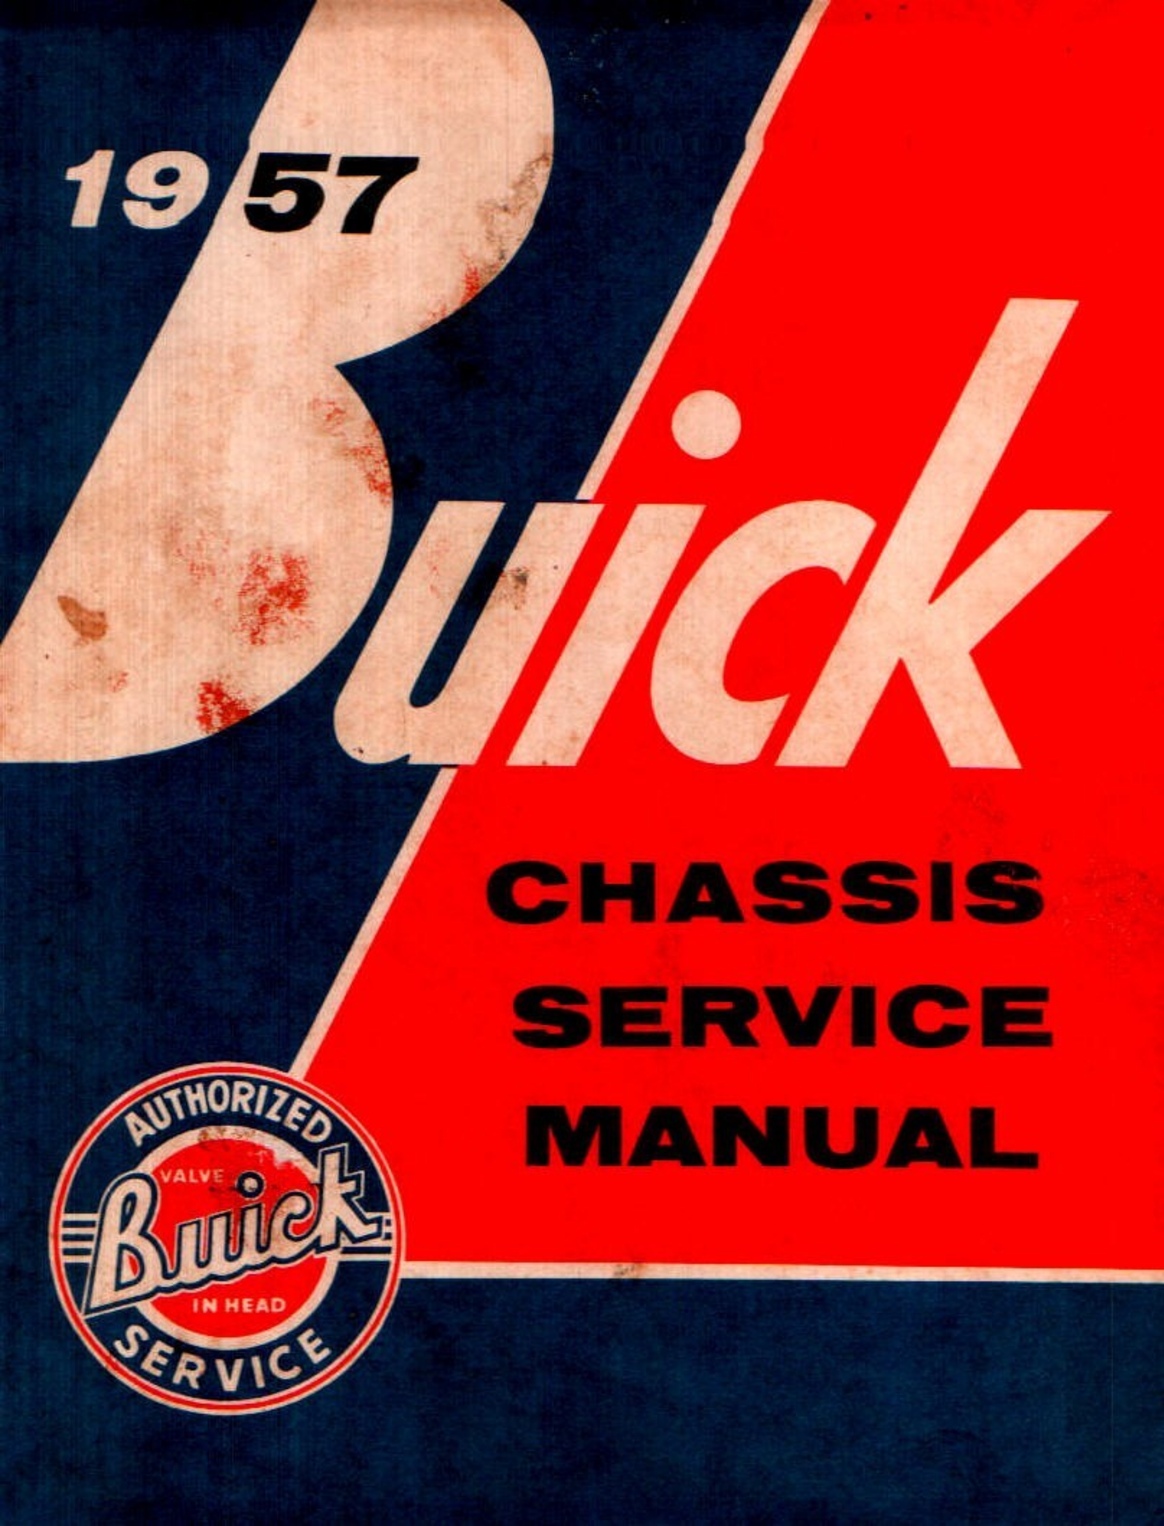 n_01 1957 Buick Shop Manual - Gen Information-001-001.jpg